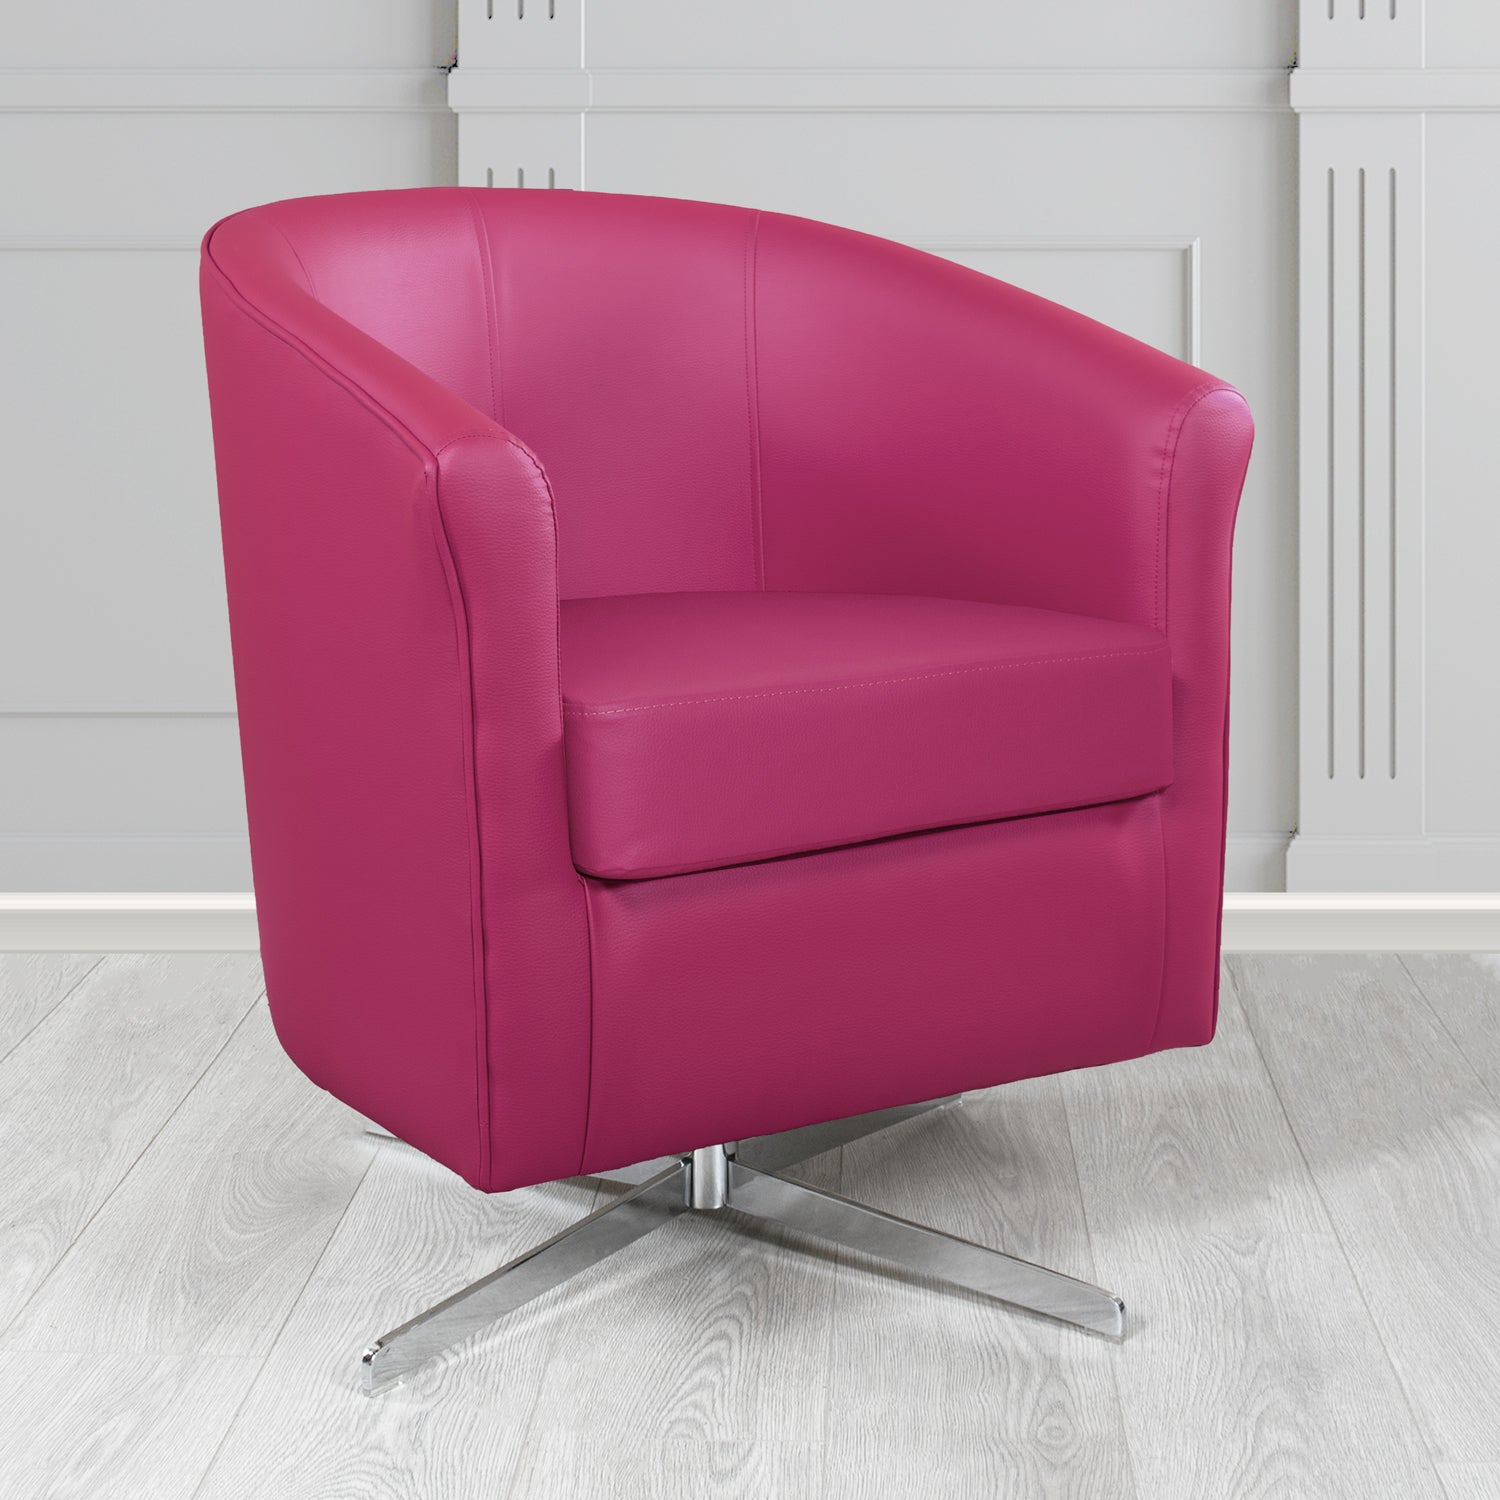 Cannes Swivel Tub Chair in Just Colour Raspberry Crush Crib 5 Faux Leather - The Tub Chair Shop